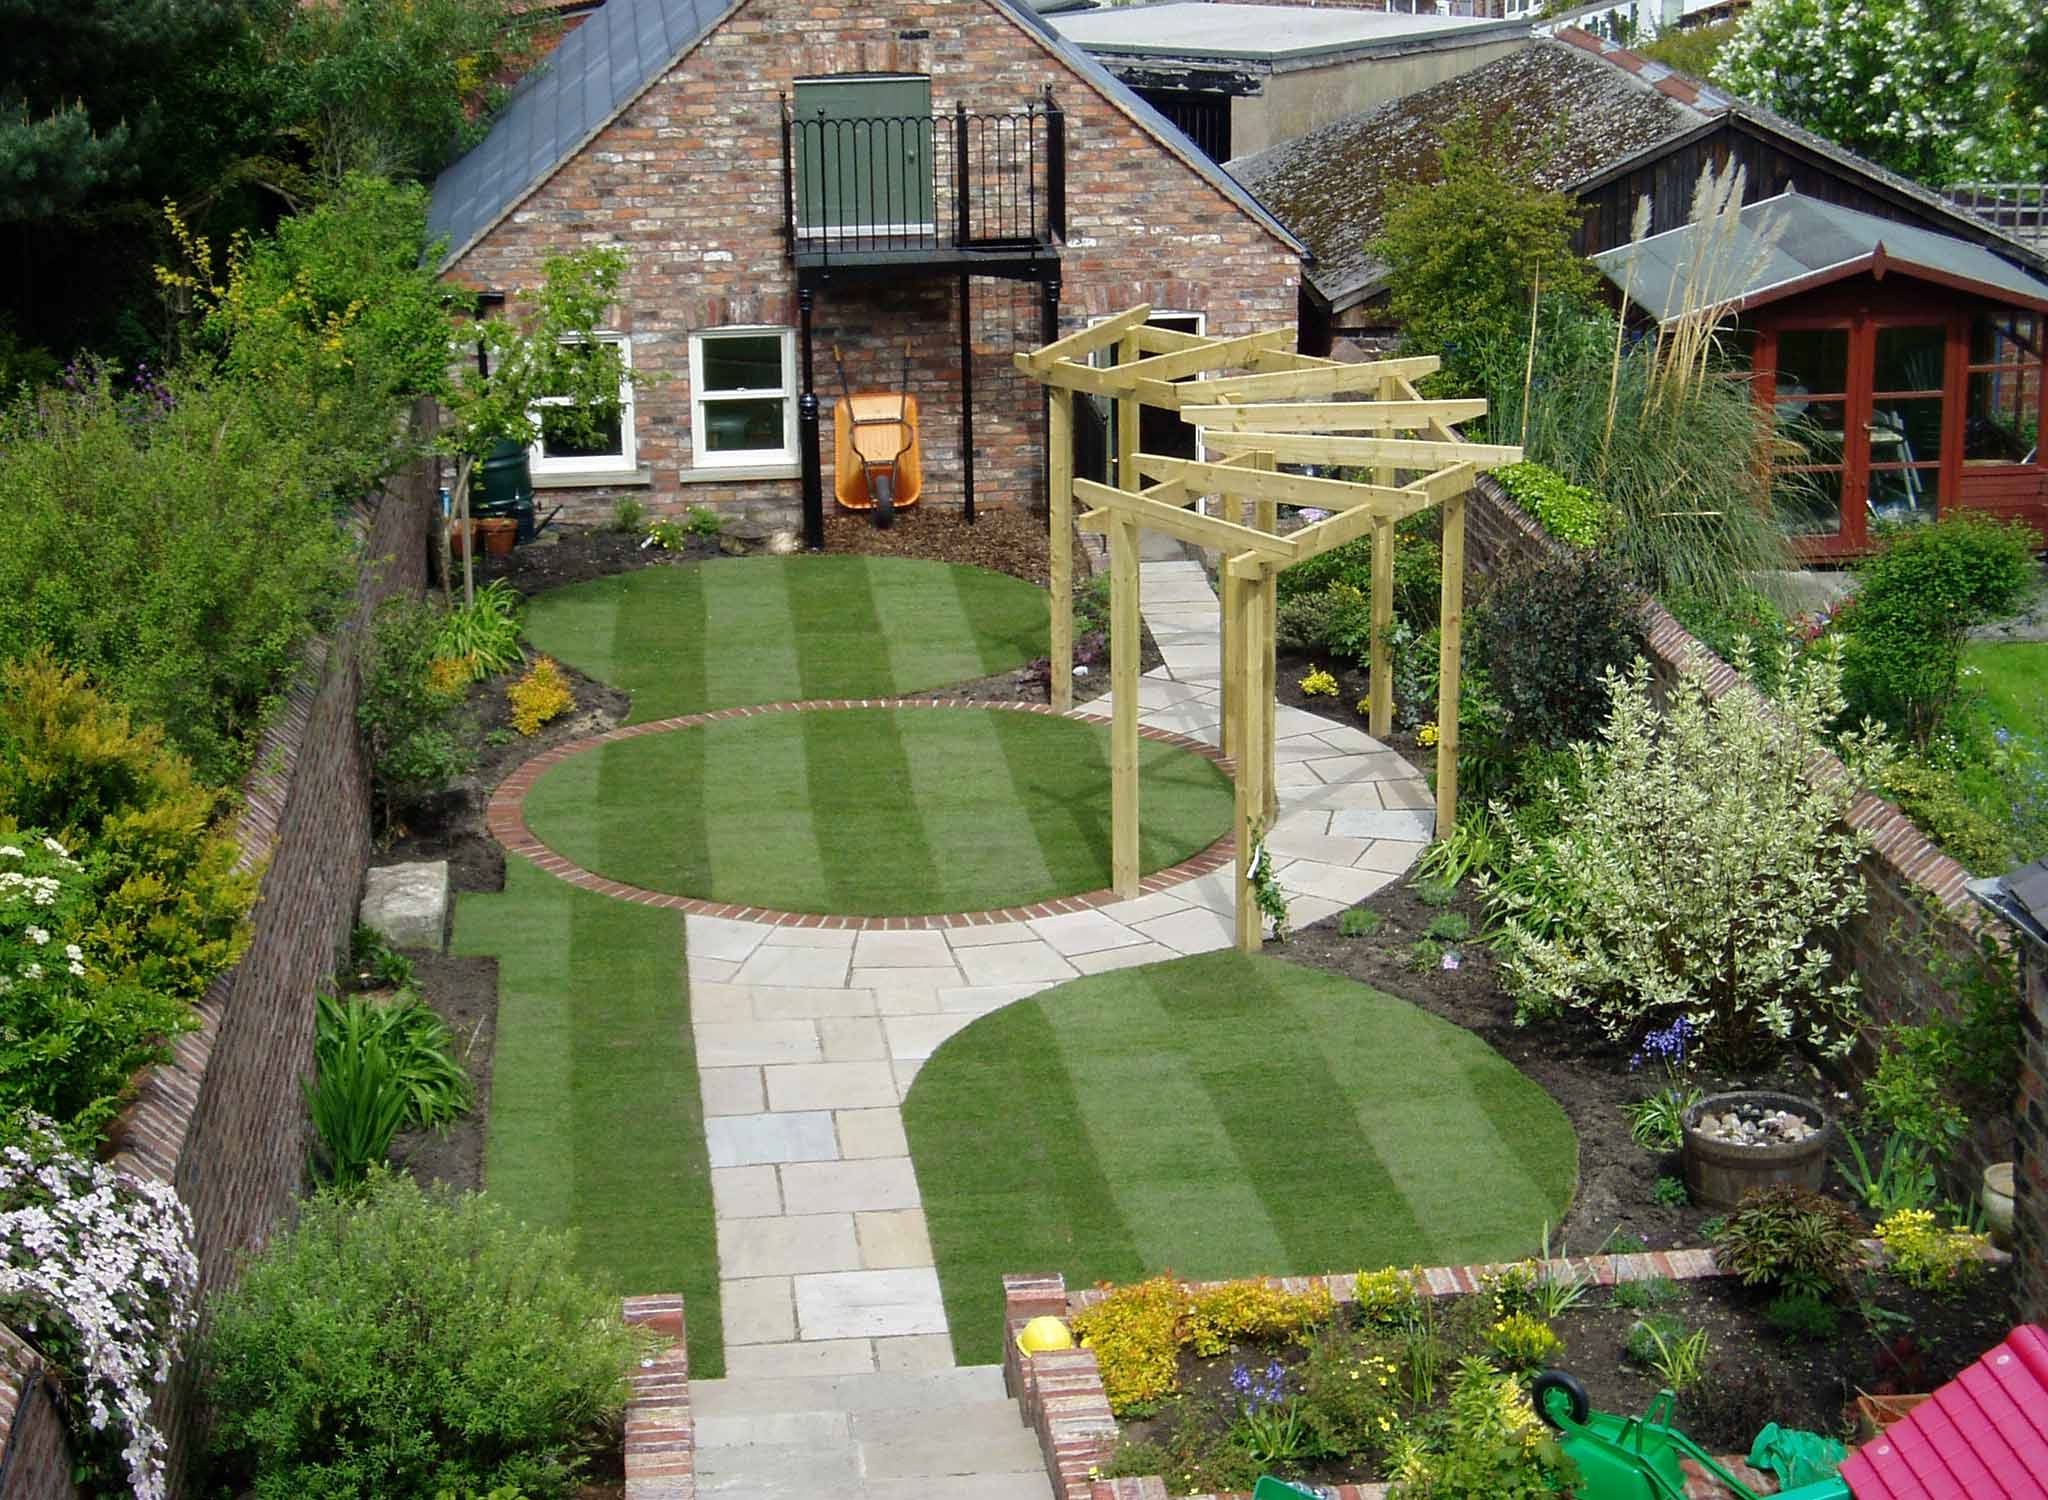 minimal-garden-design-ideas-fresh-stone-garden-ideas-patiofurn-home-design-ideas-of-minimal-garden-design-ideas.jpg